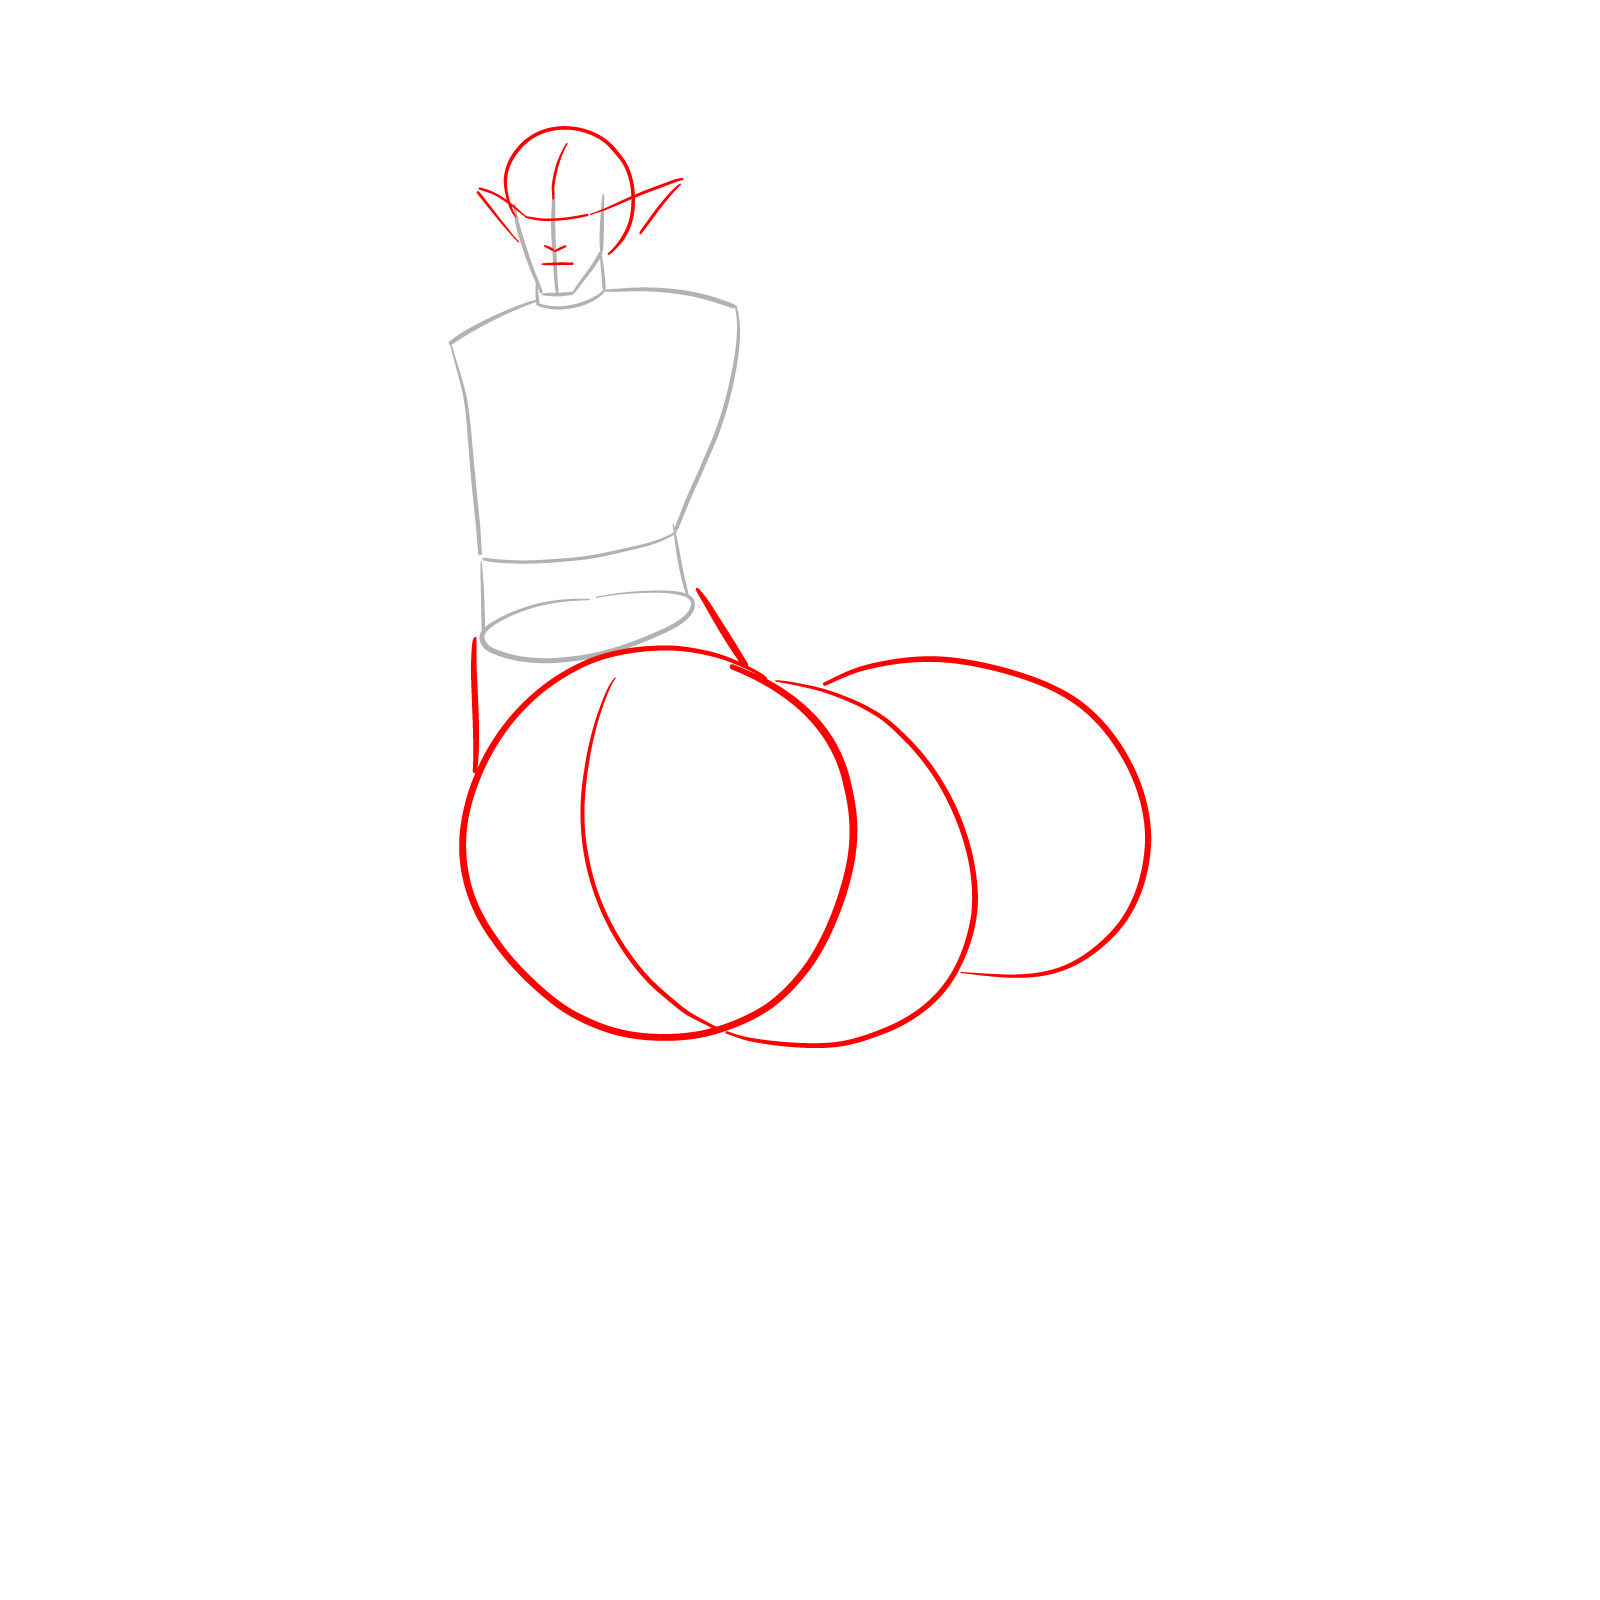 How to draw a Male Centaur - step 02